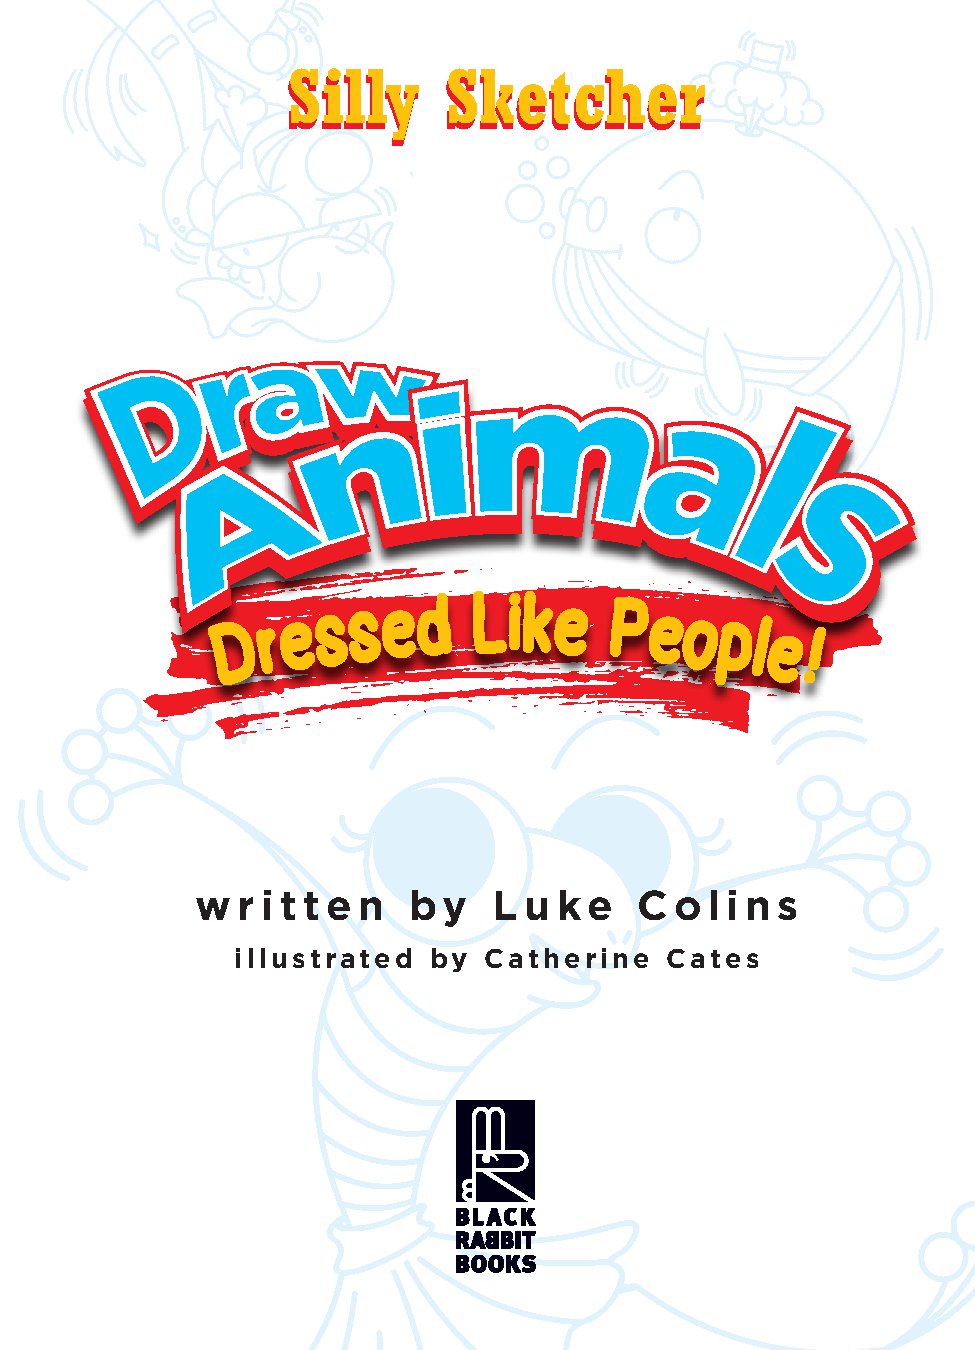 Draw Animals Dressed Like People!